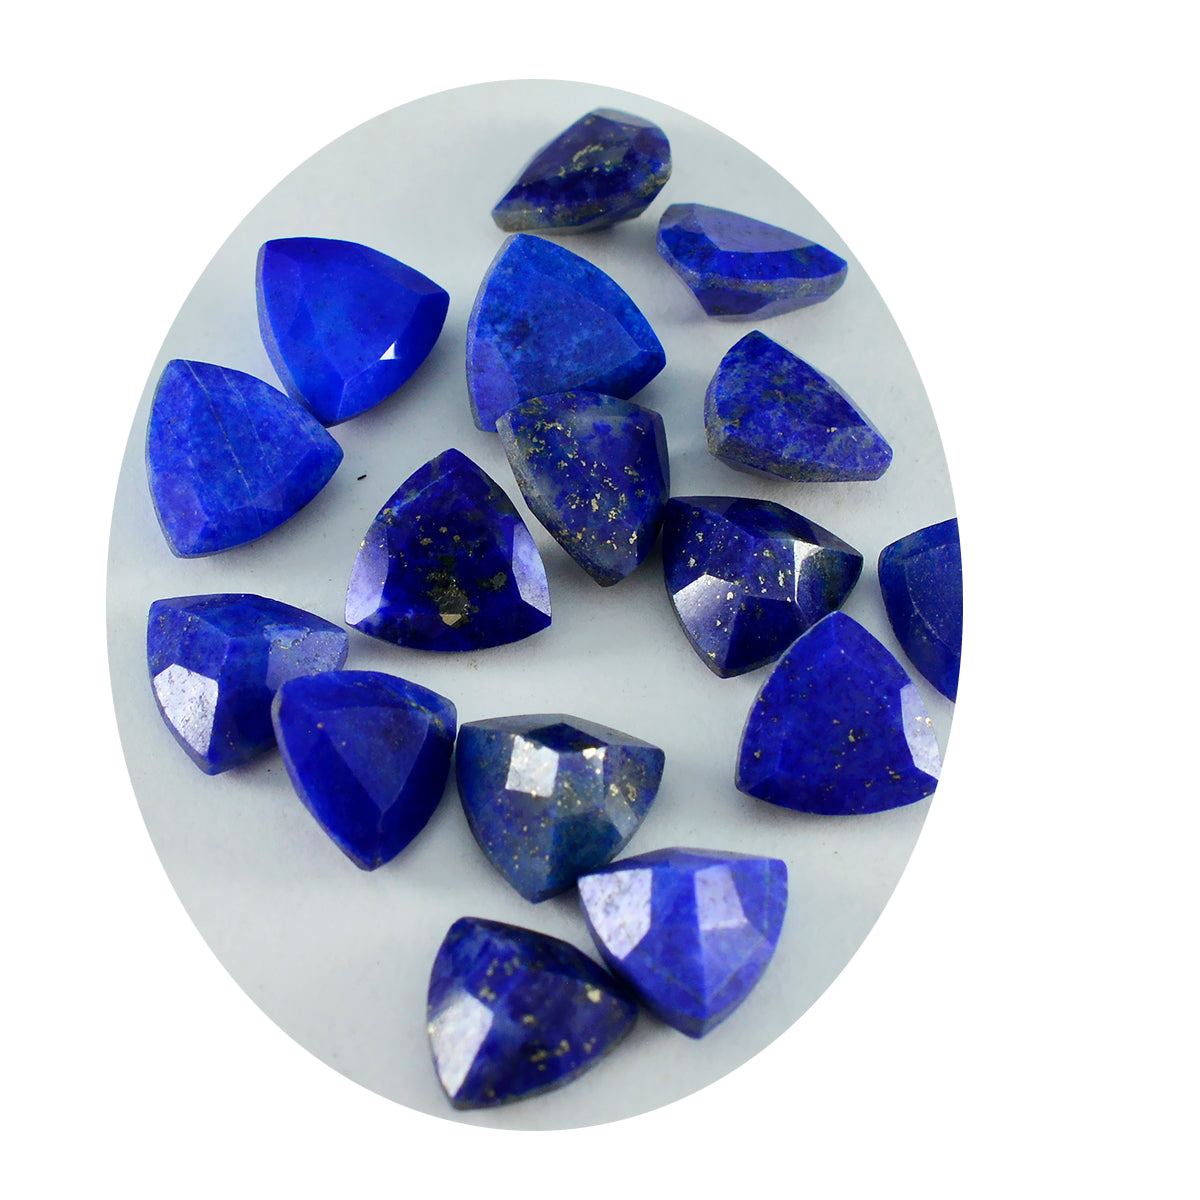 Riyogems 1PC Echte Blauwe Lapis Lazuli Facet 7x7 mm Biljoen Vorm schoonheid Kwaliteit Losse Edelstenen